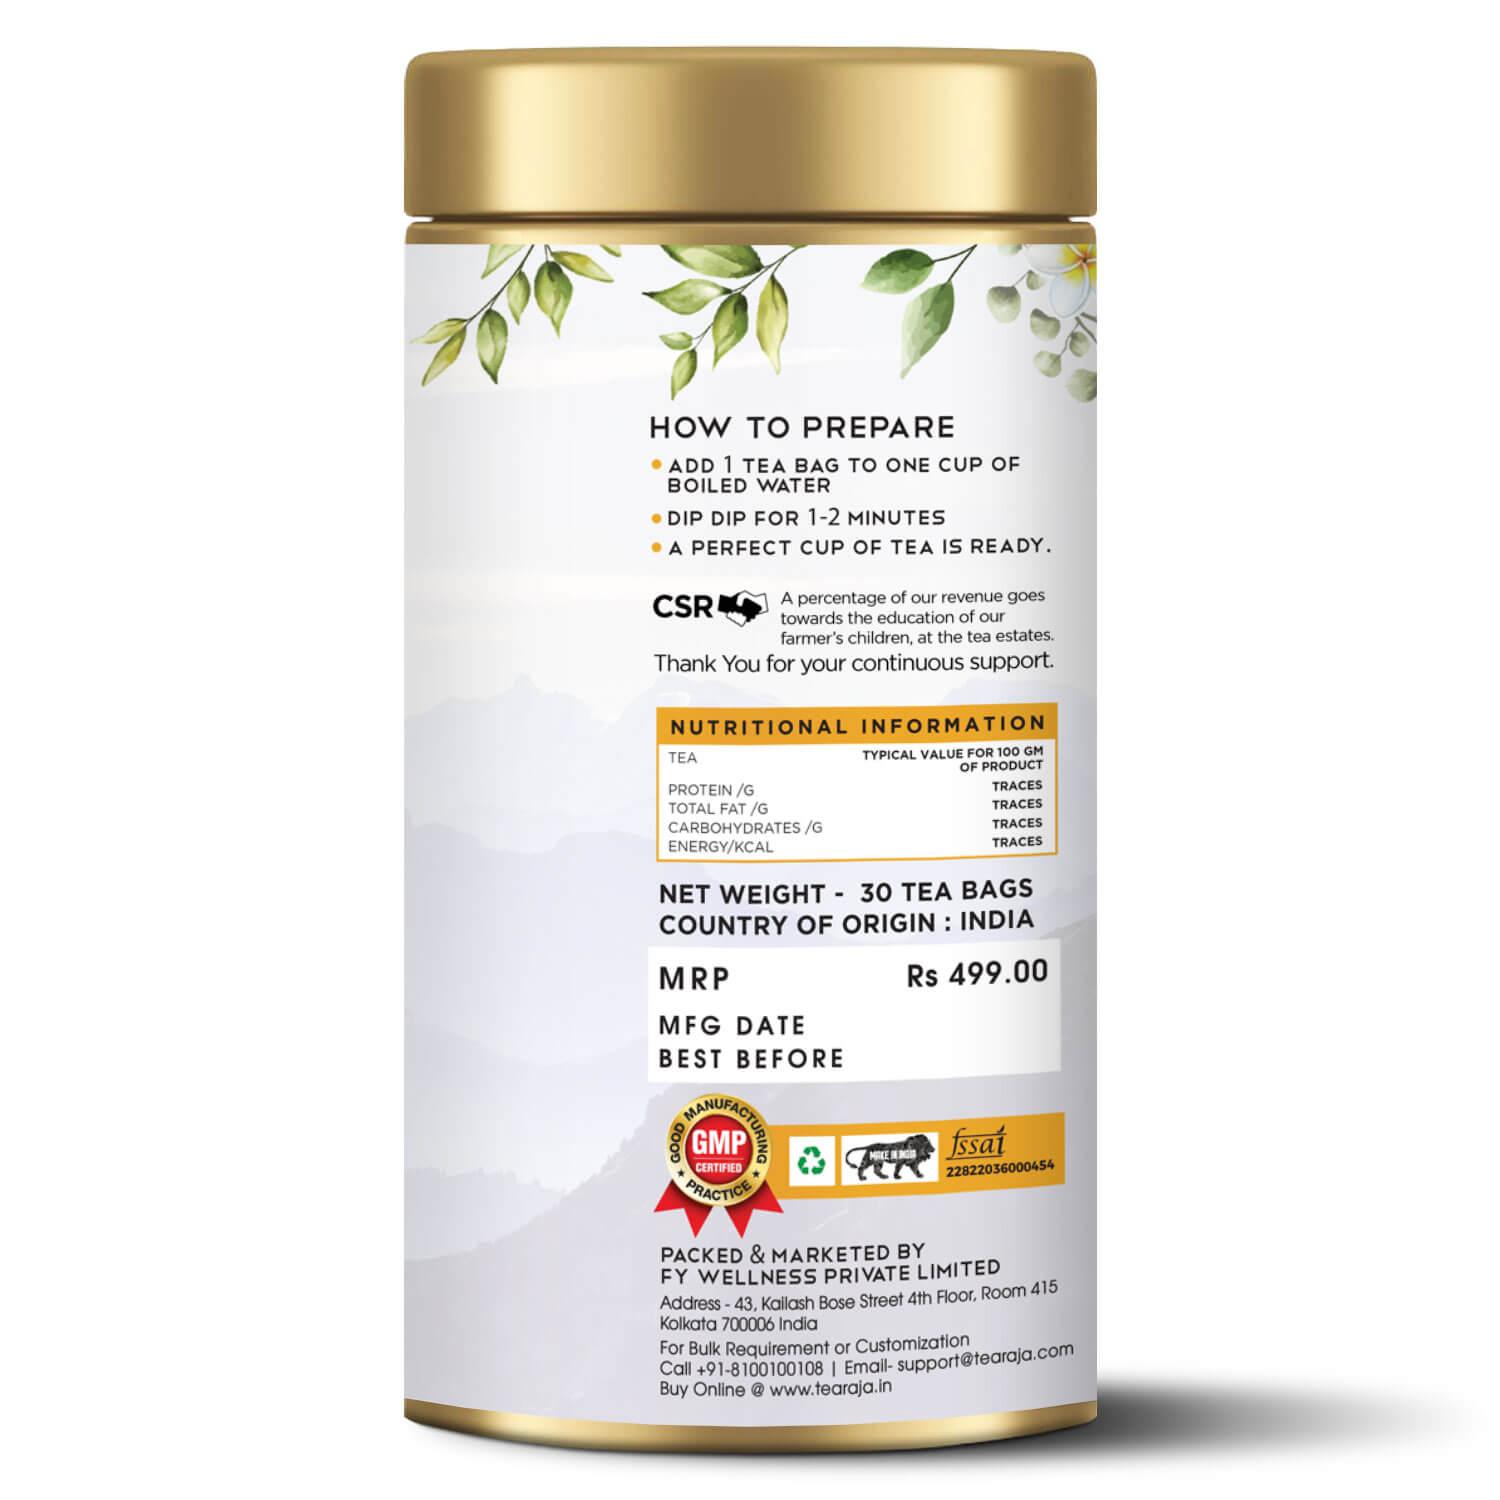 Organic Green Tea 30 Teabags - Tearaja